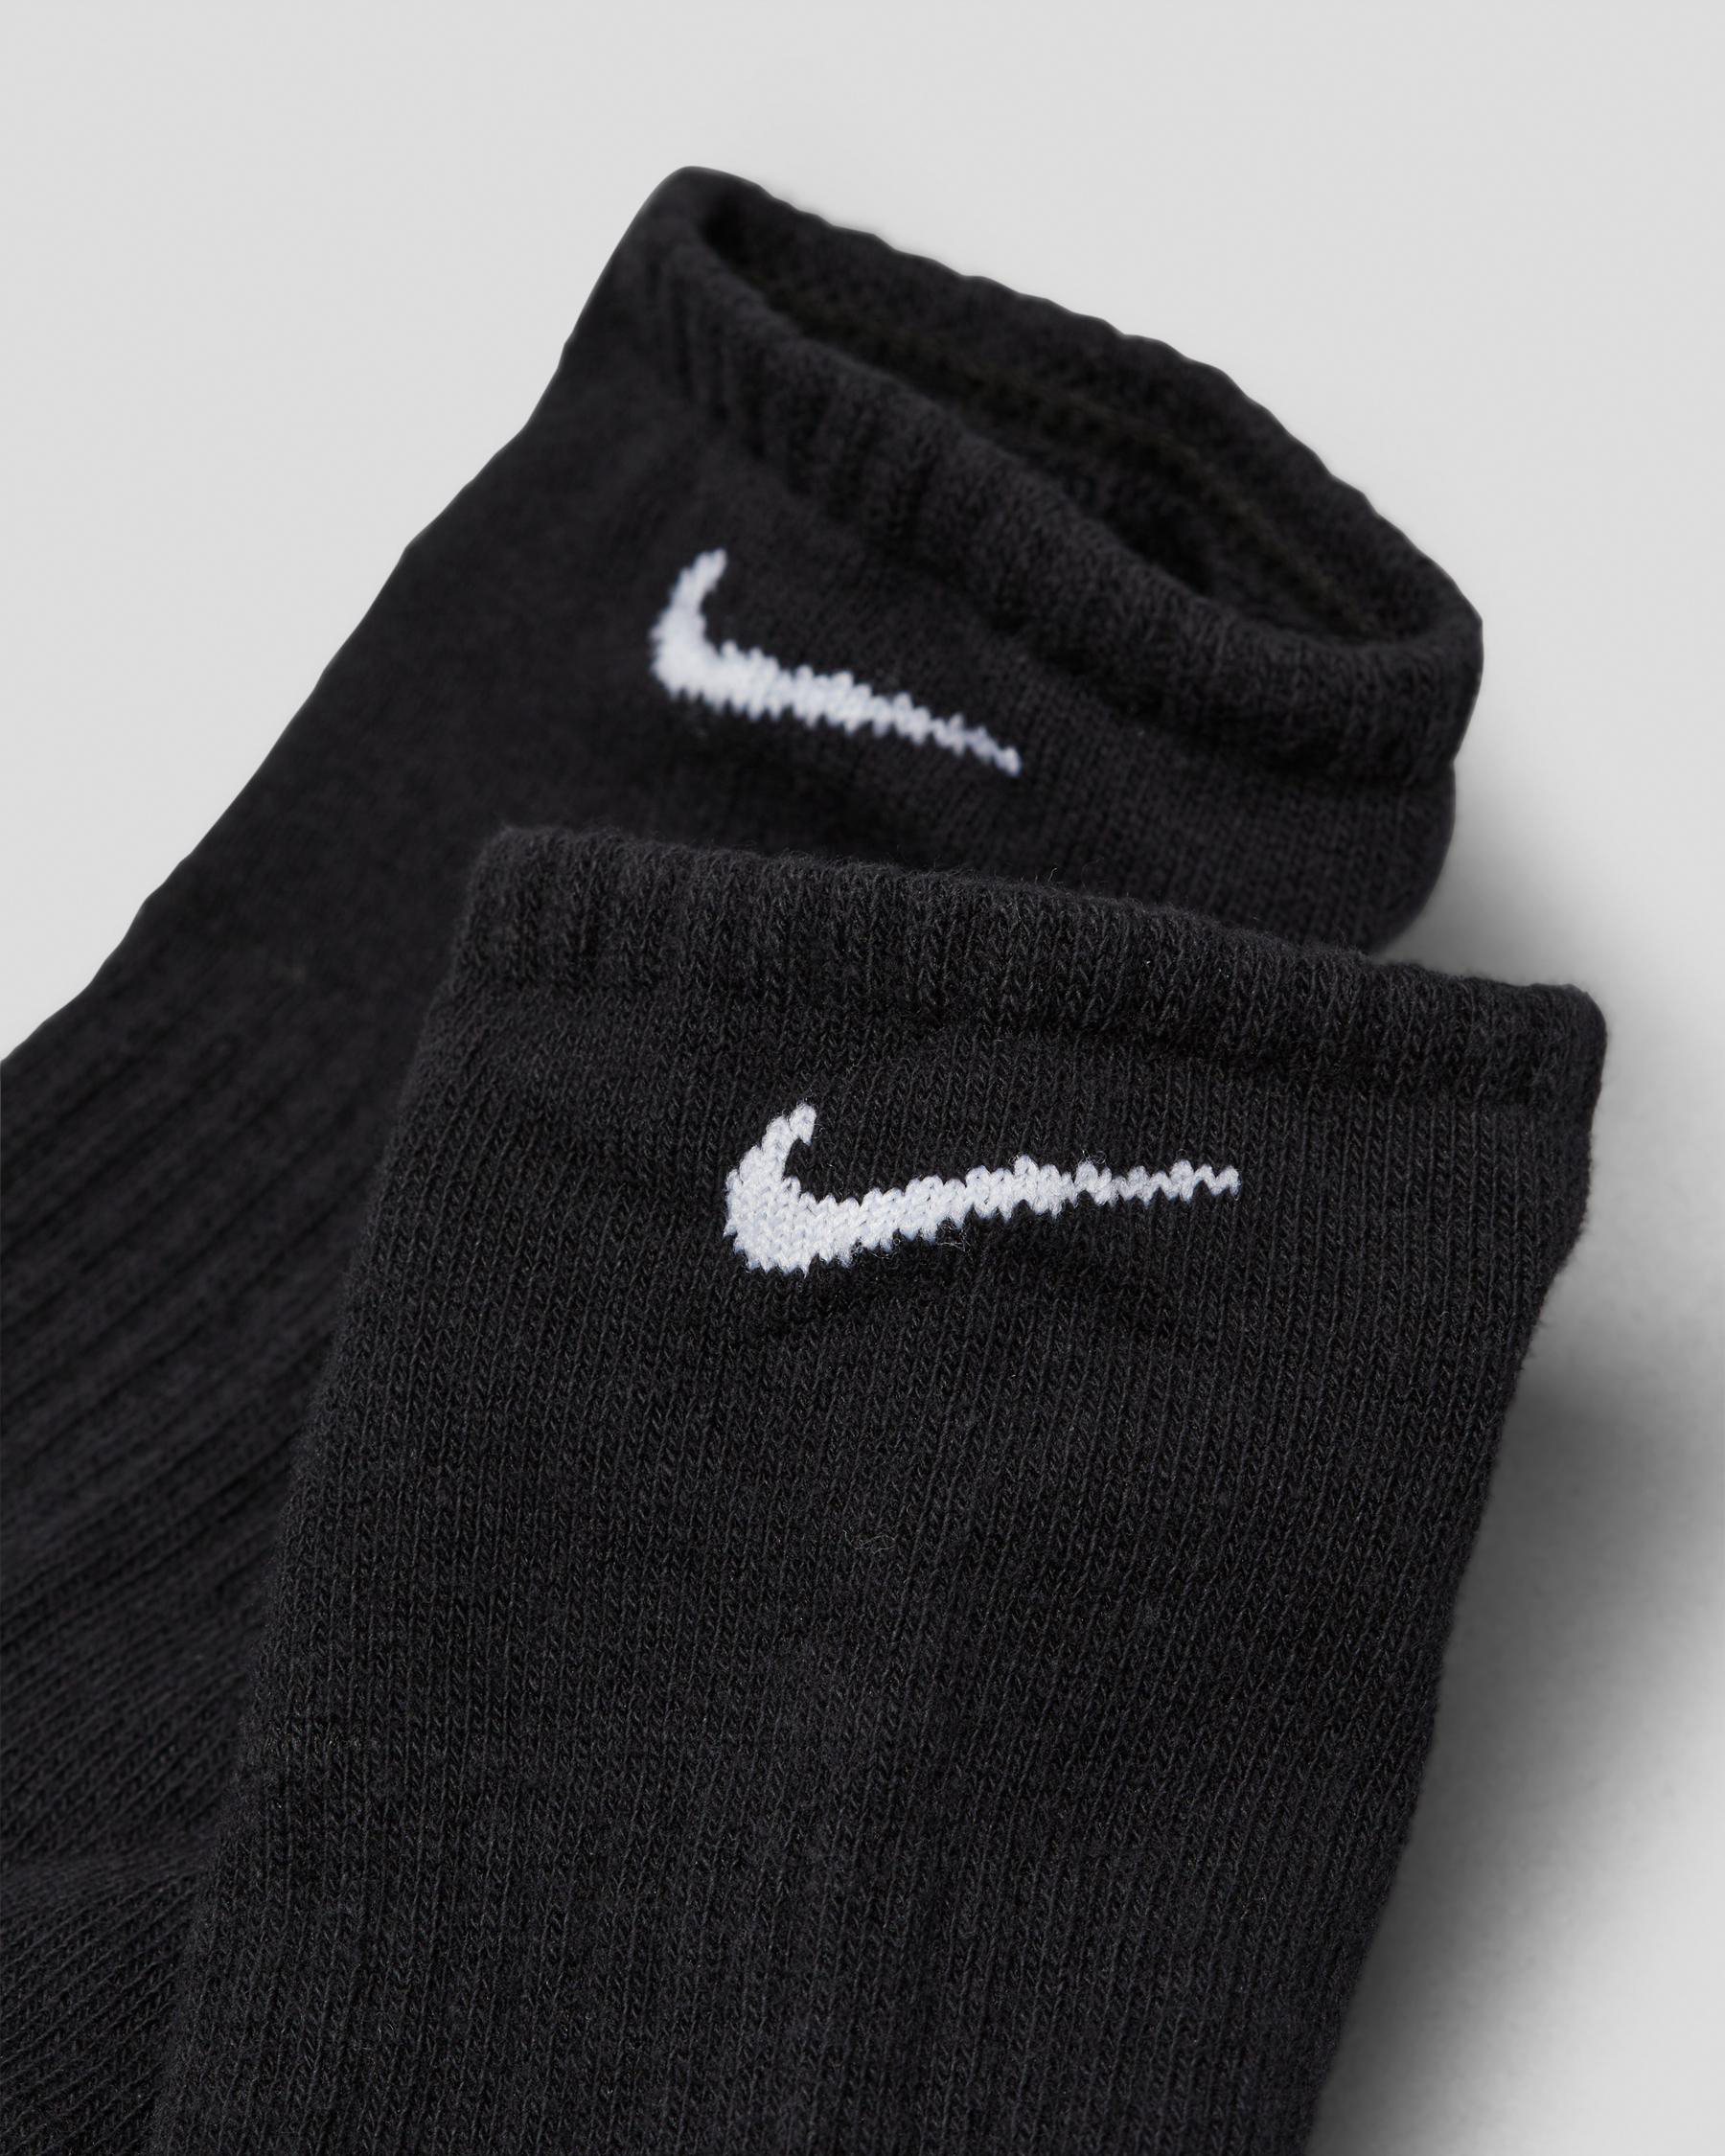 Nike Everyday Cushioned No Show Socks 3 Pack In Black/white - Fast ...